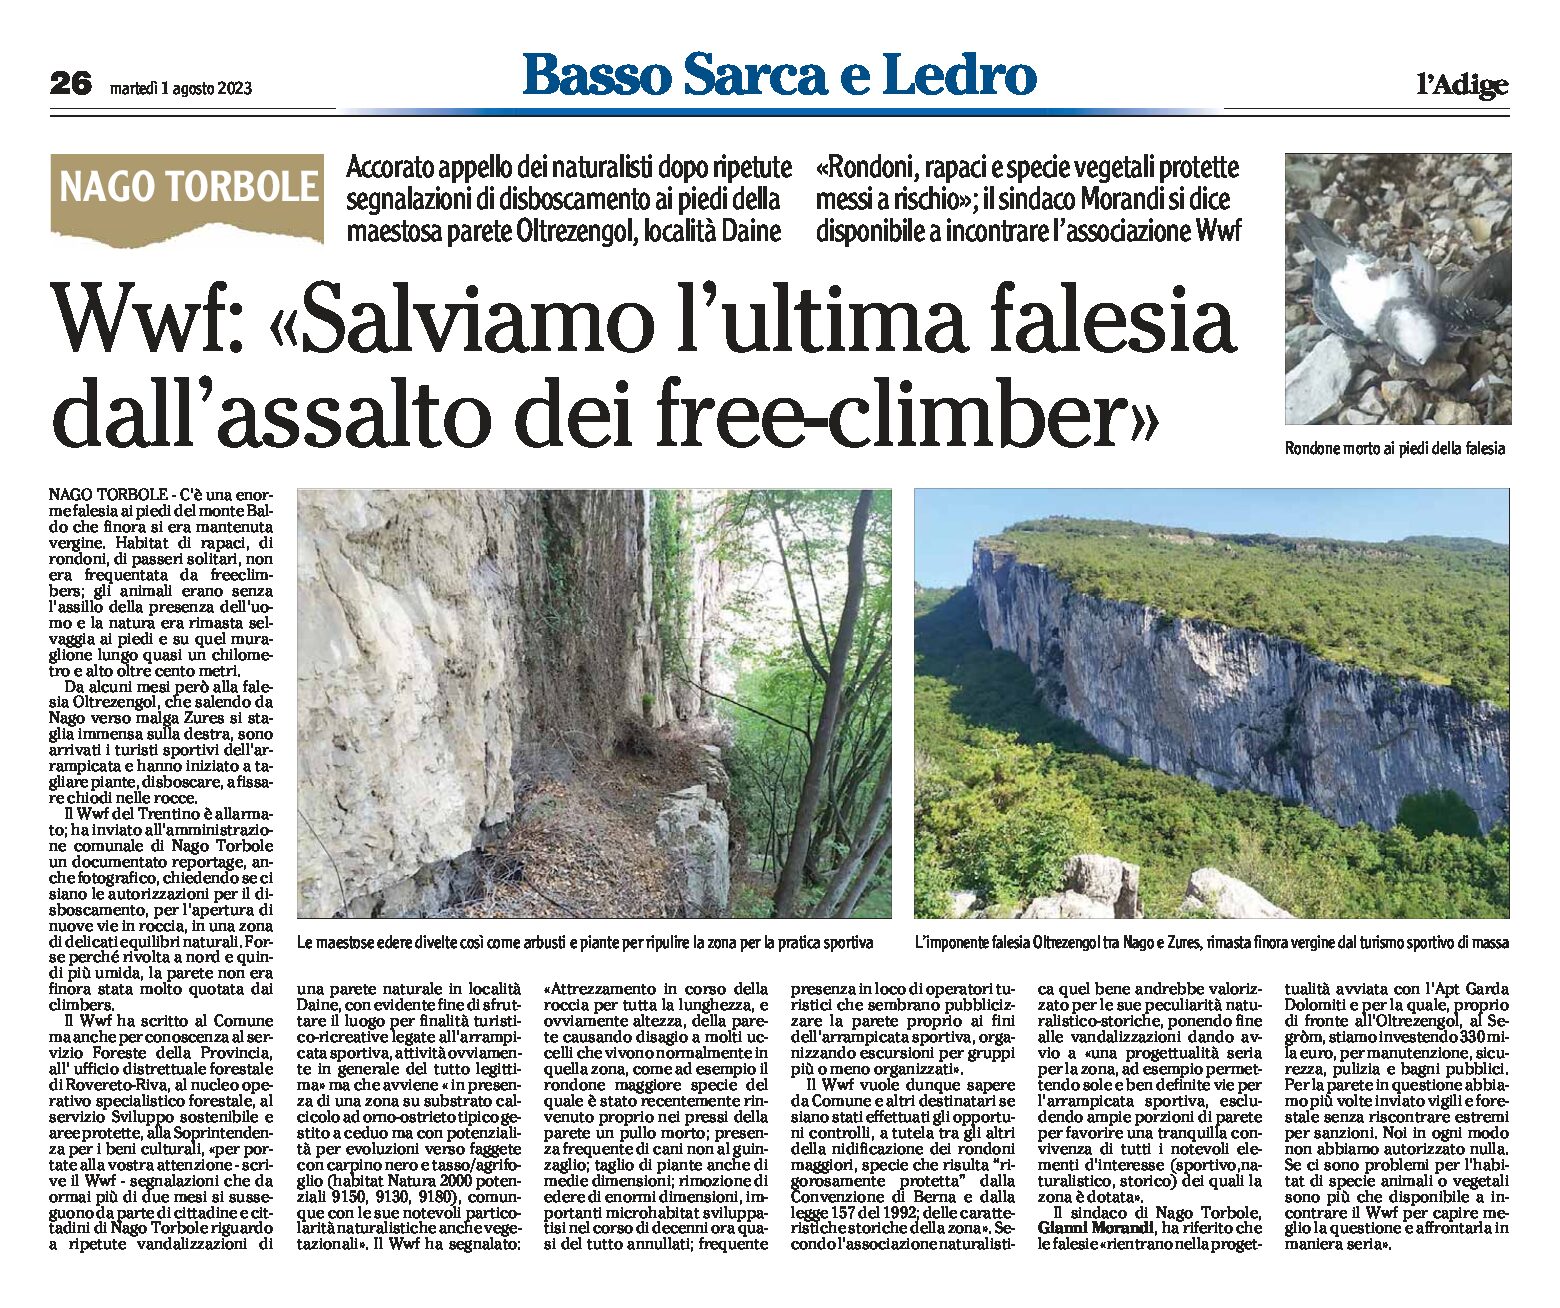 Nago Torbole: Wwf “salviamo l’ultima falesia dall’assalto dei free-climber”